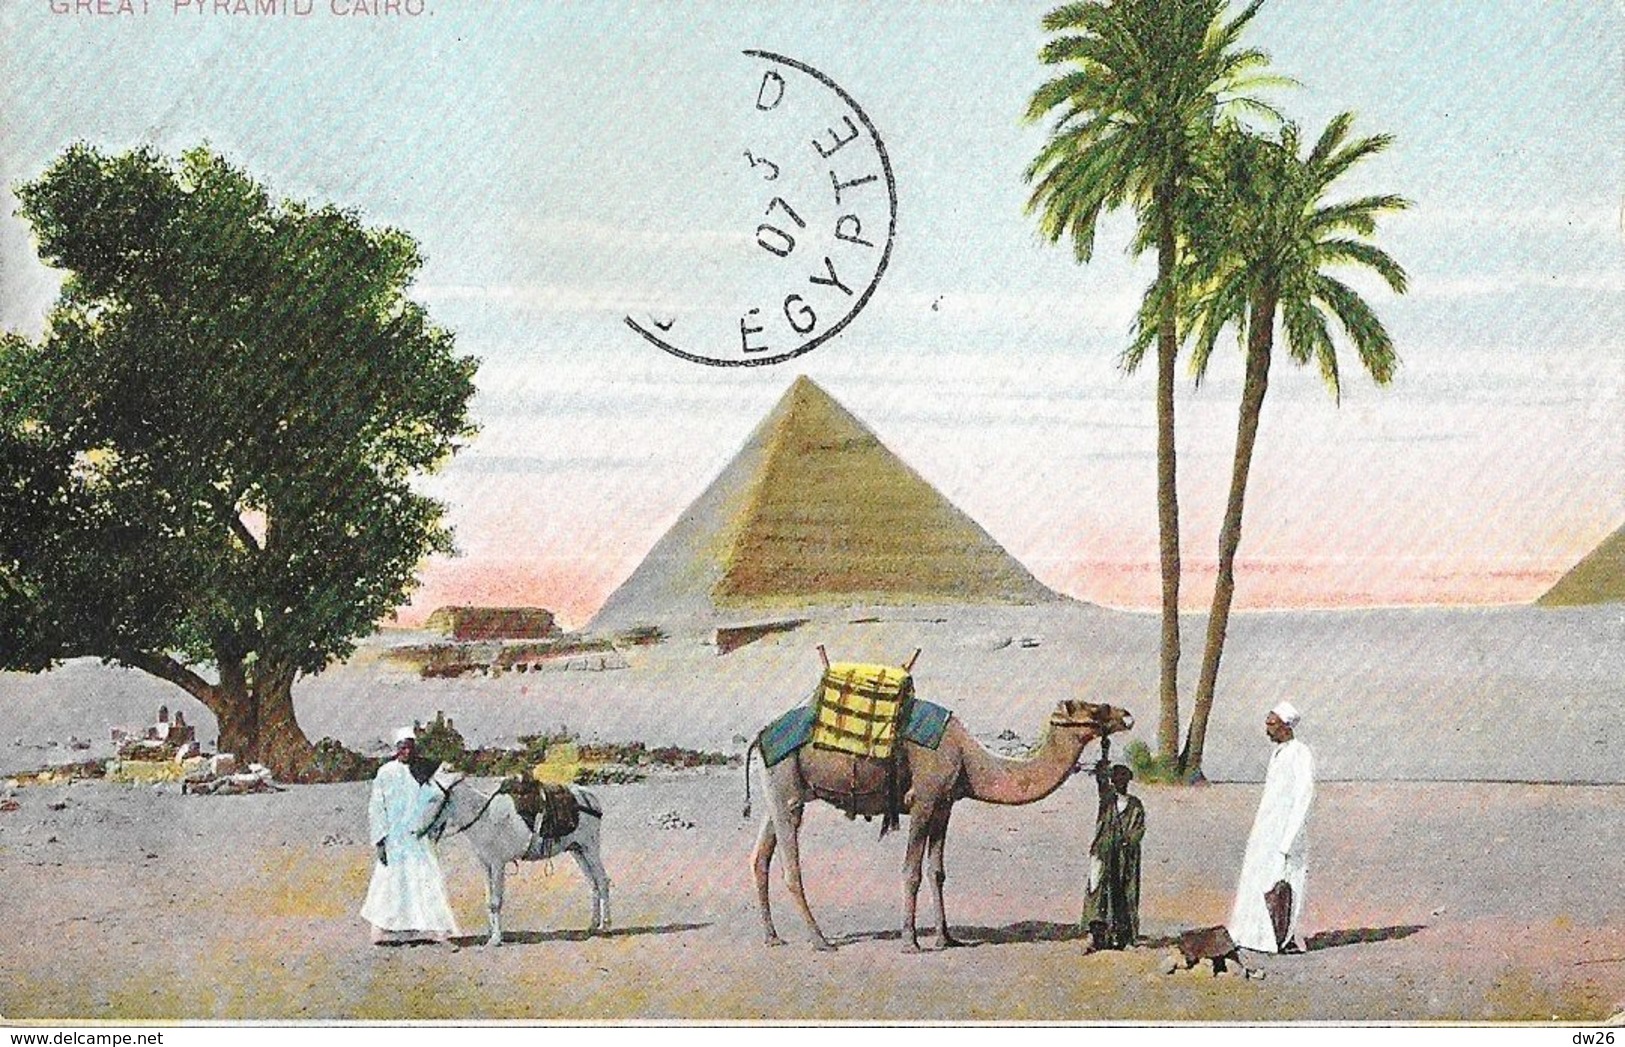 Le Caire, Les Pyramides (Great Pyramid, Cairo) - Th. E.L. Série 945 - Carte Non écrite - Cairo